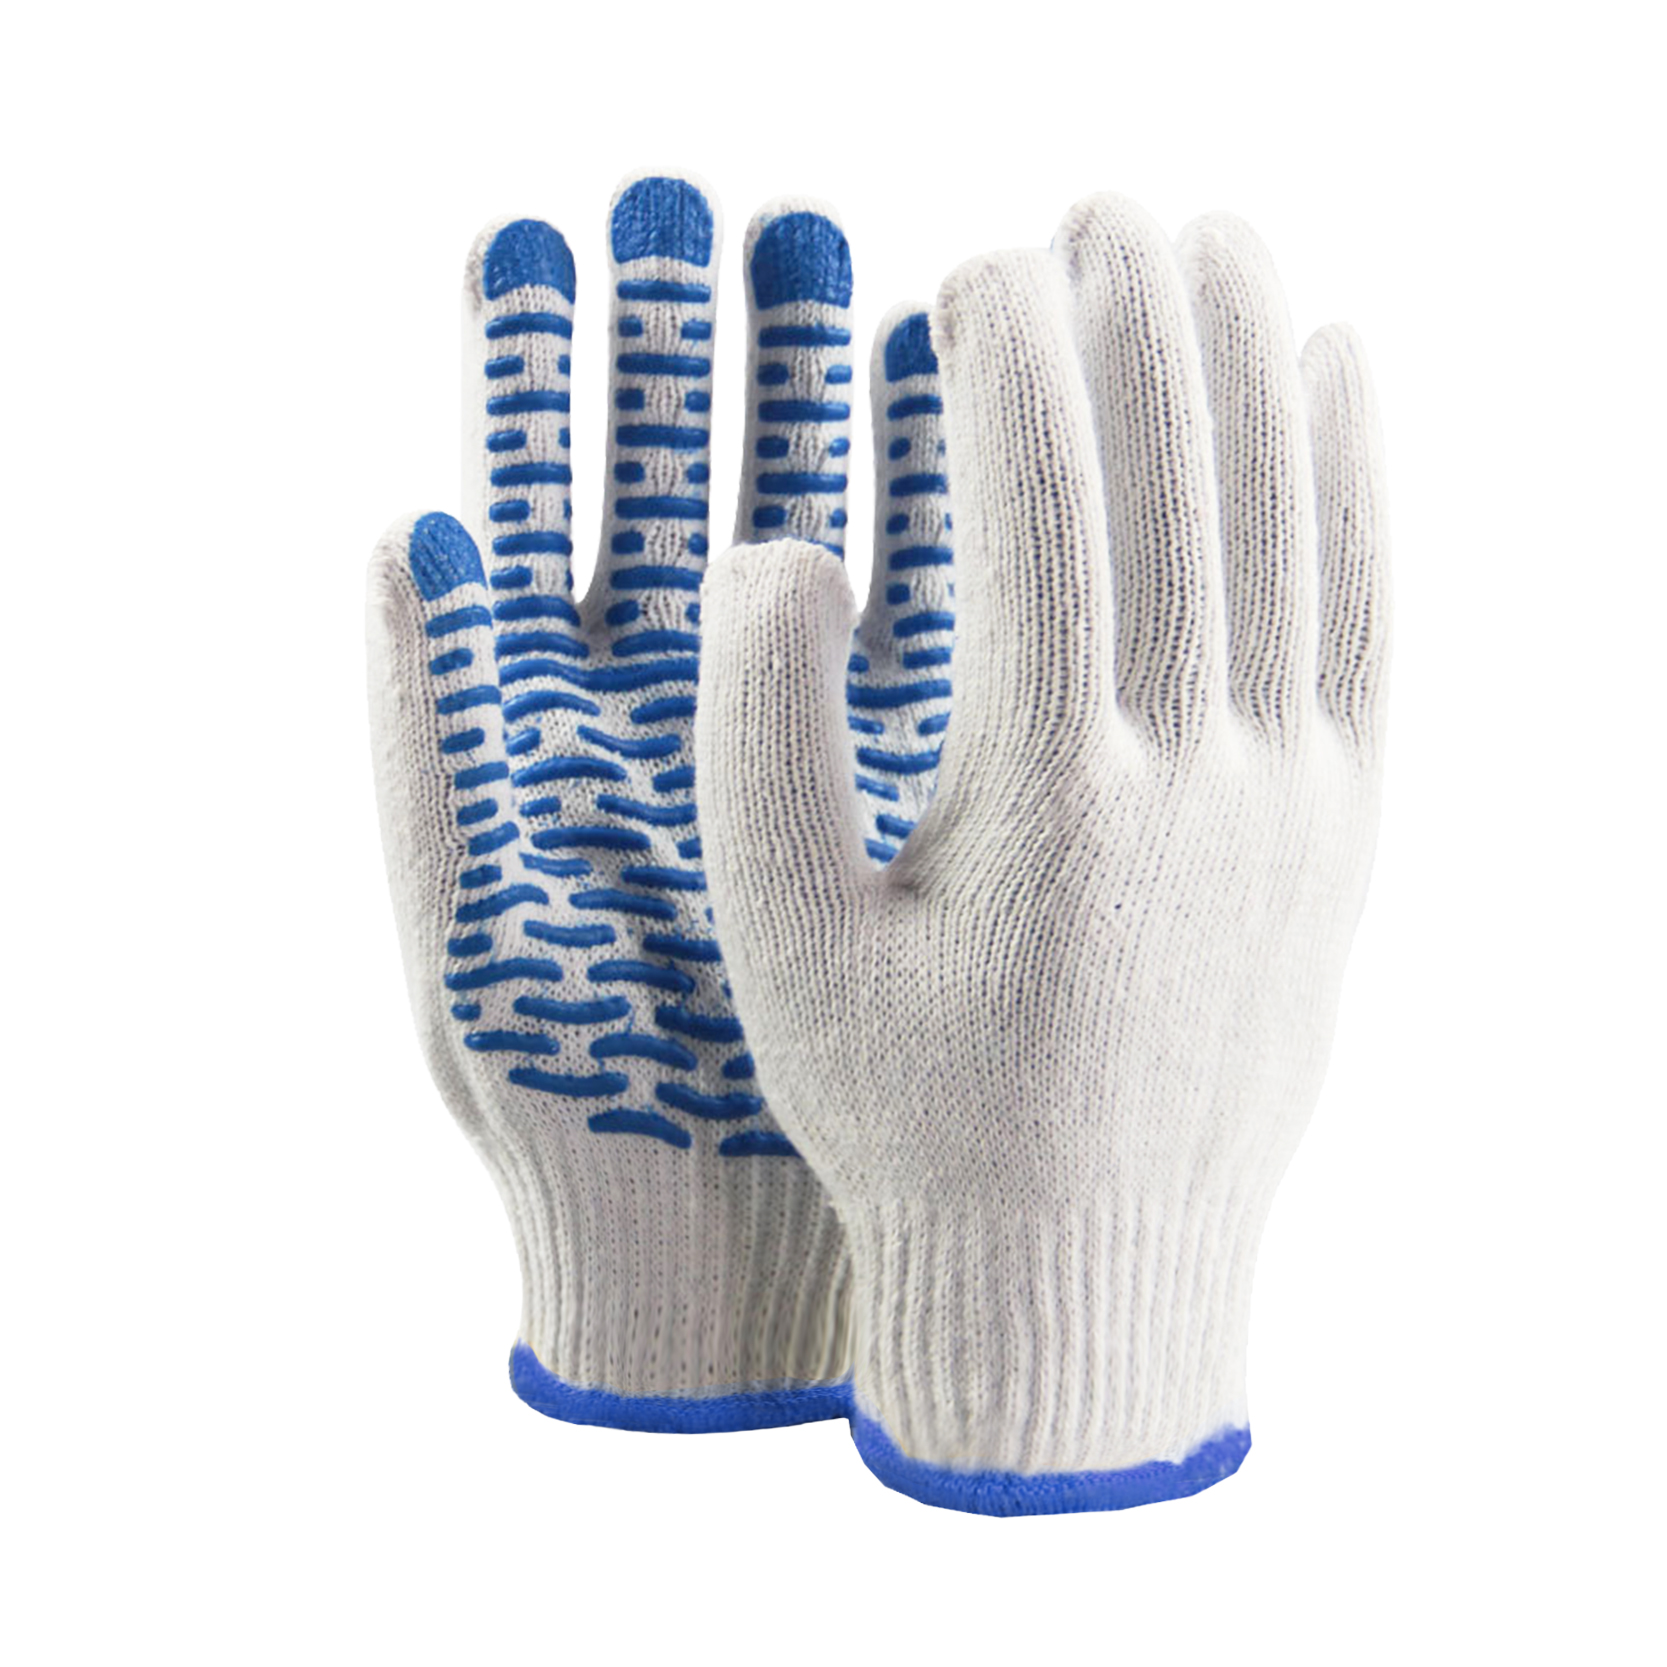 Pvc Dotted Natural White Cotton Glove Cotton String Knit Glove (2)